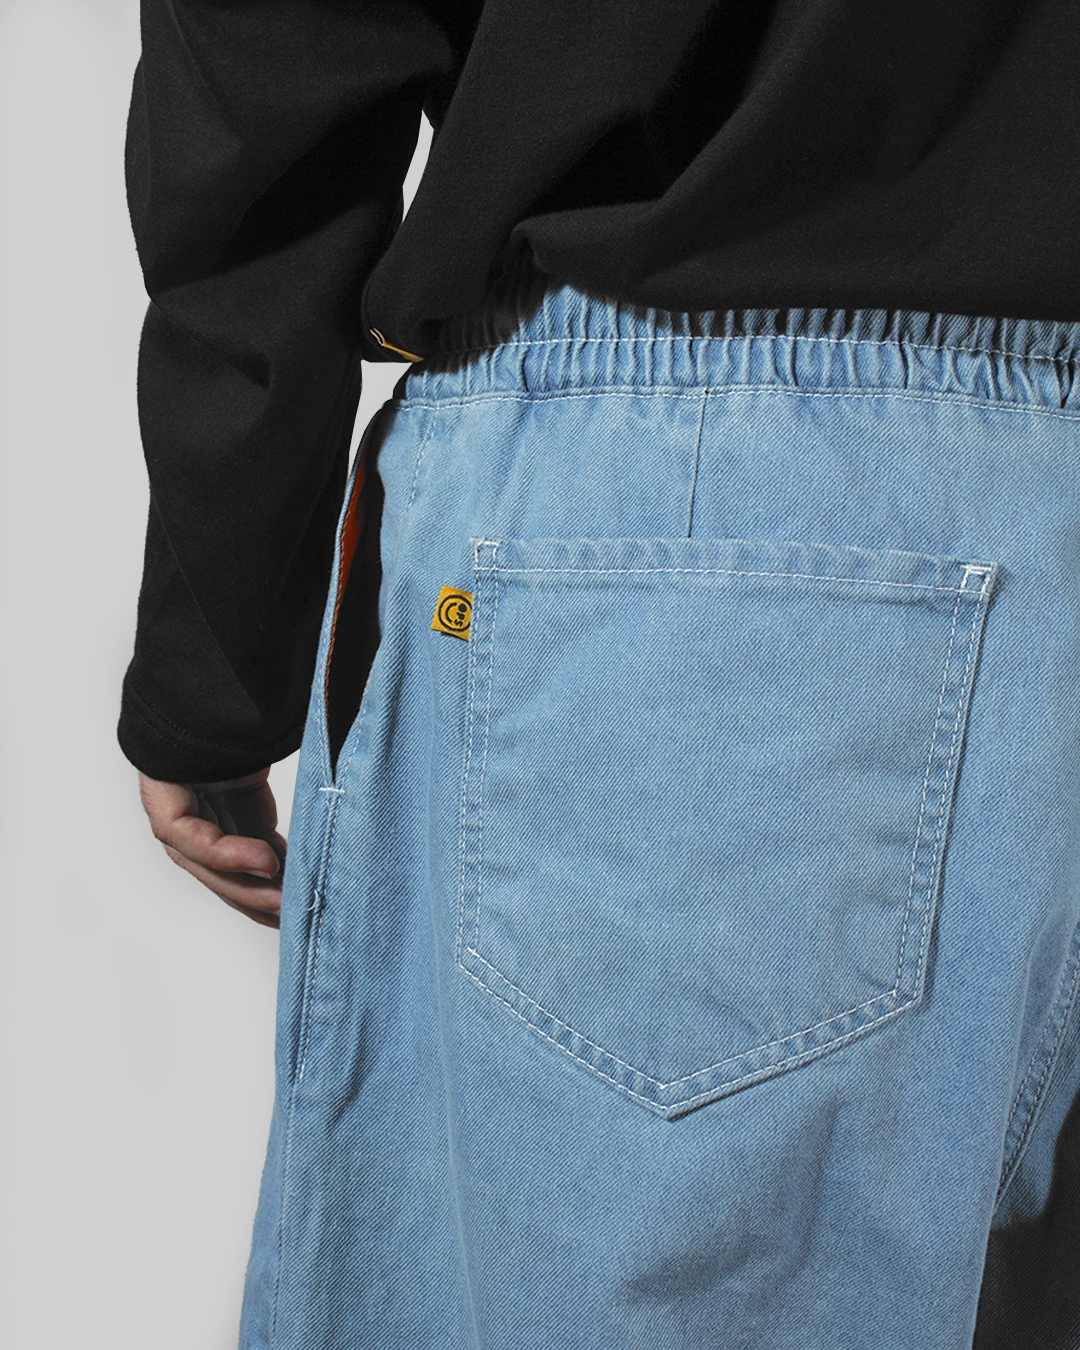 bermuda denim detalle ancho largo bolsillos costuras invertidas detalle espalda bolsillo